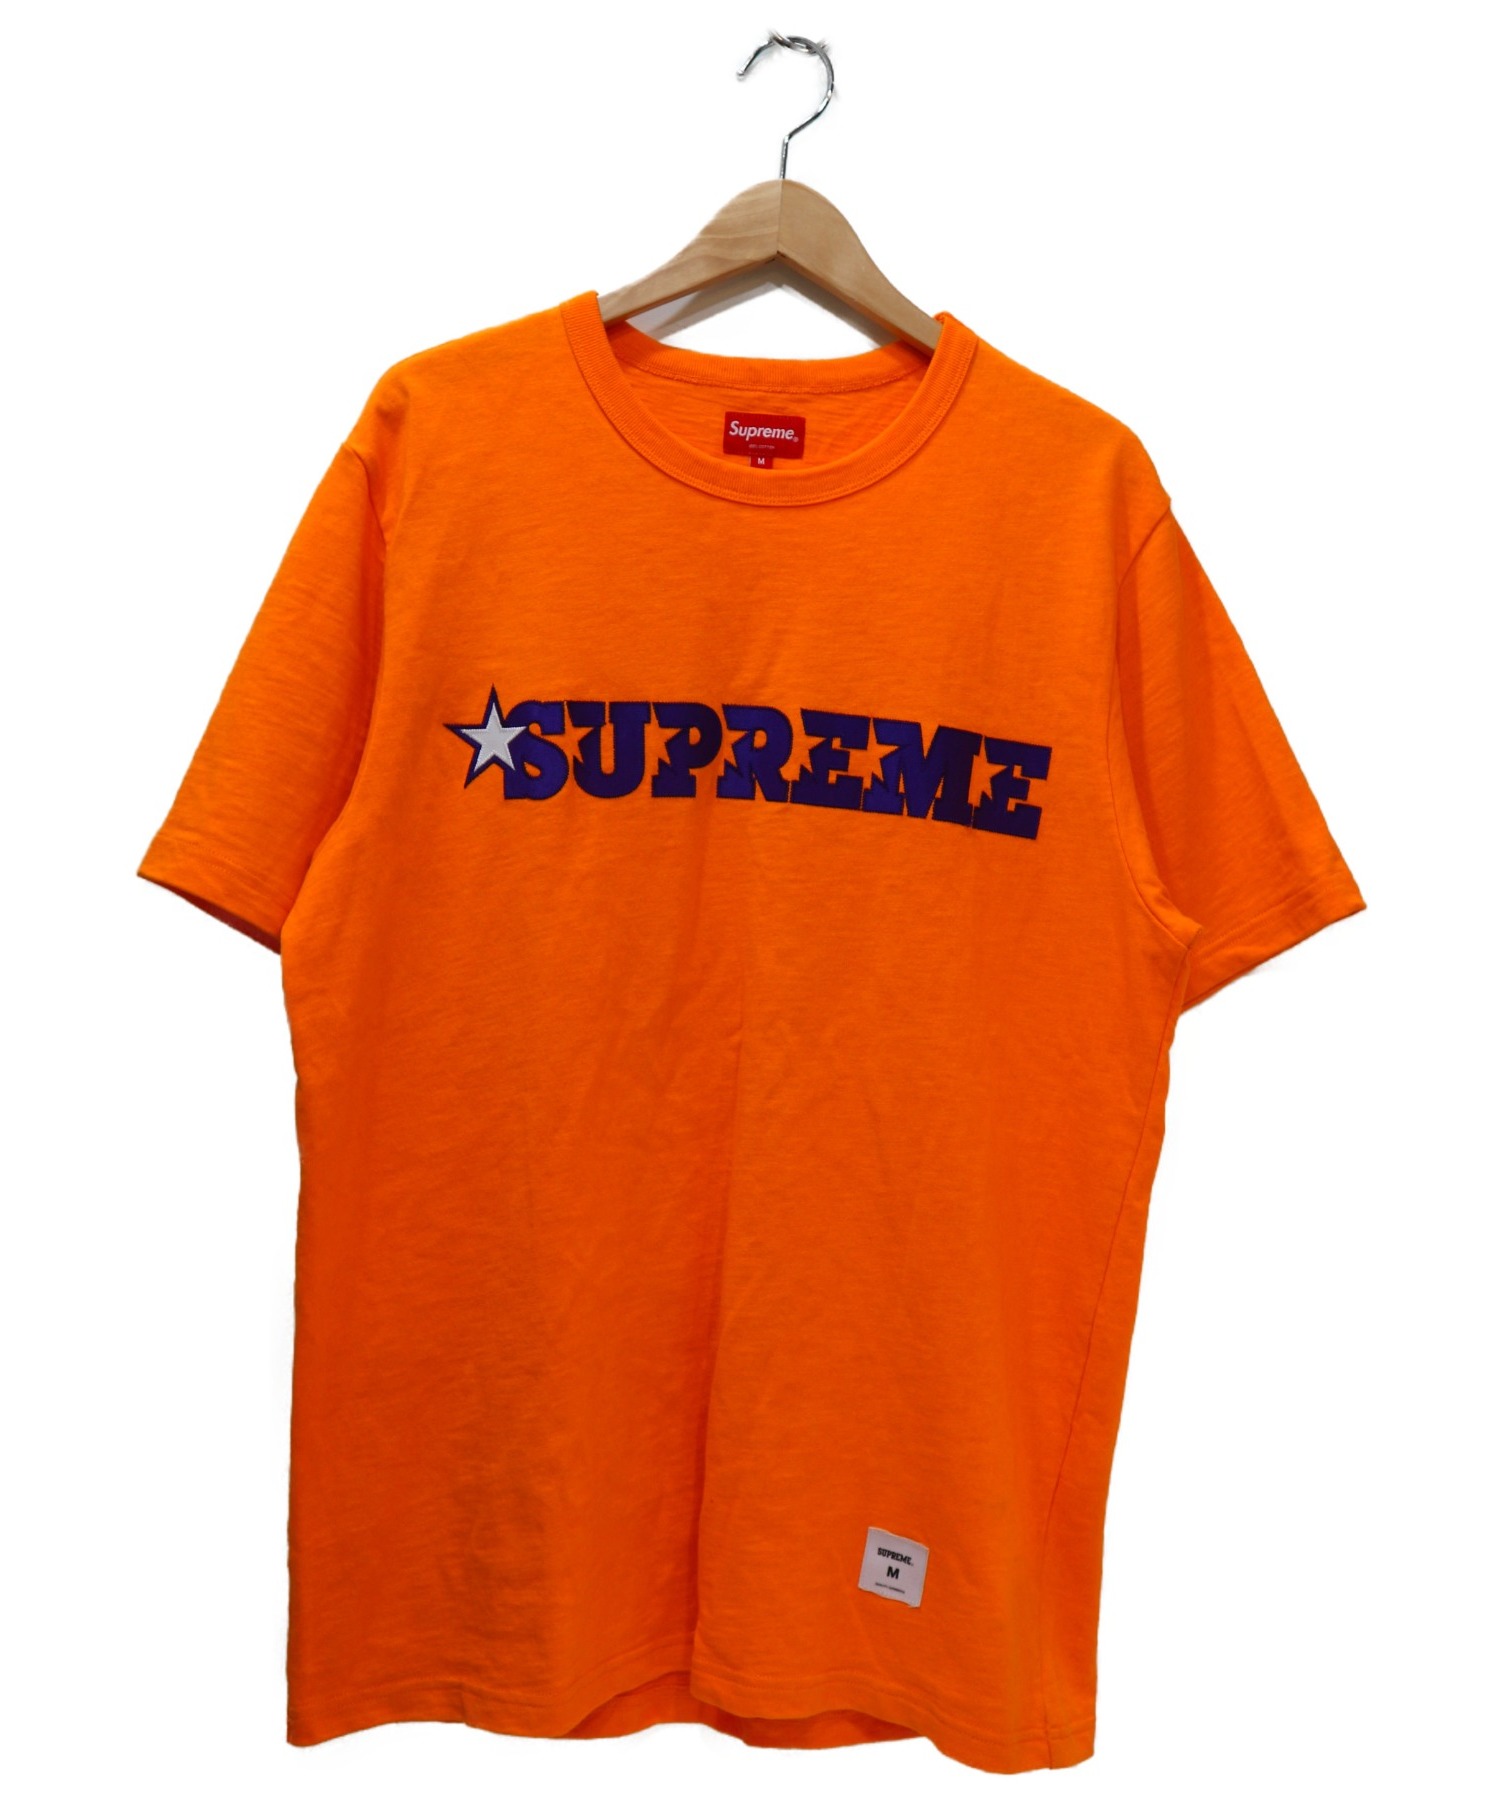 Supreme (シュプリーム) ロゴ刺繍Tシャツ オレンジ×パープル サイズ:M 20SS WEEK9 STAR LOGO TEE 人気アイテム